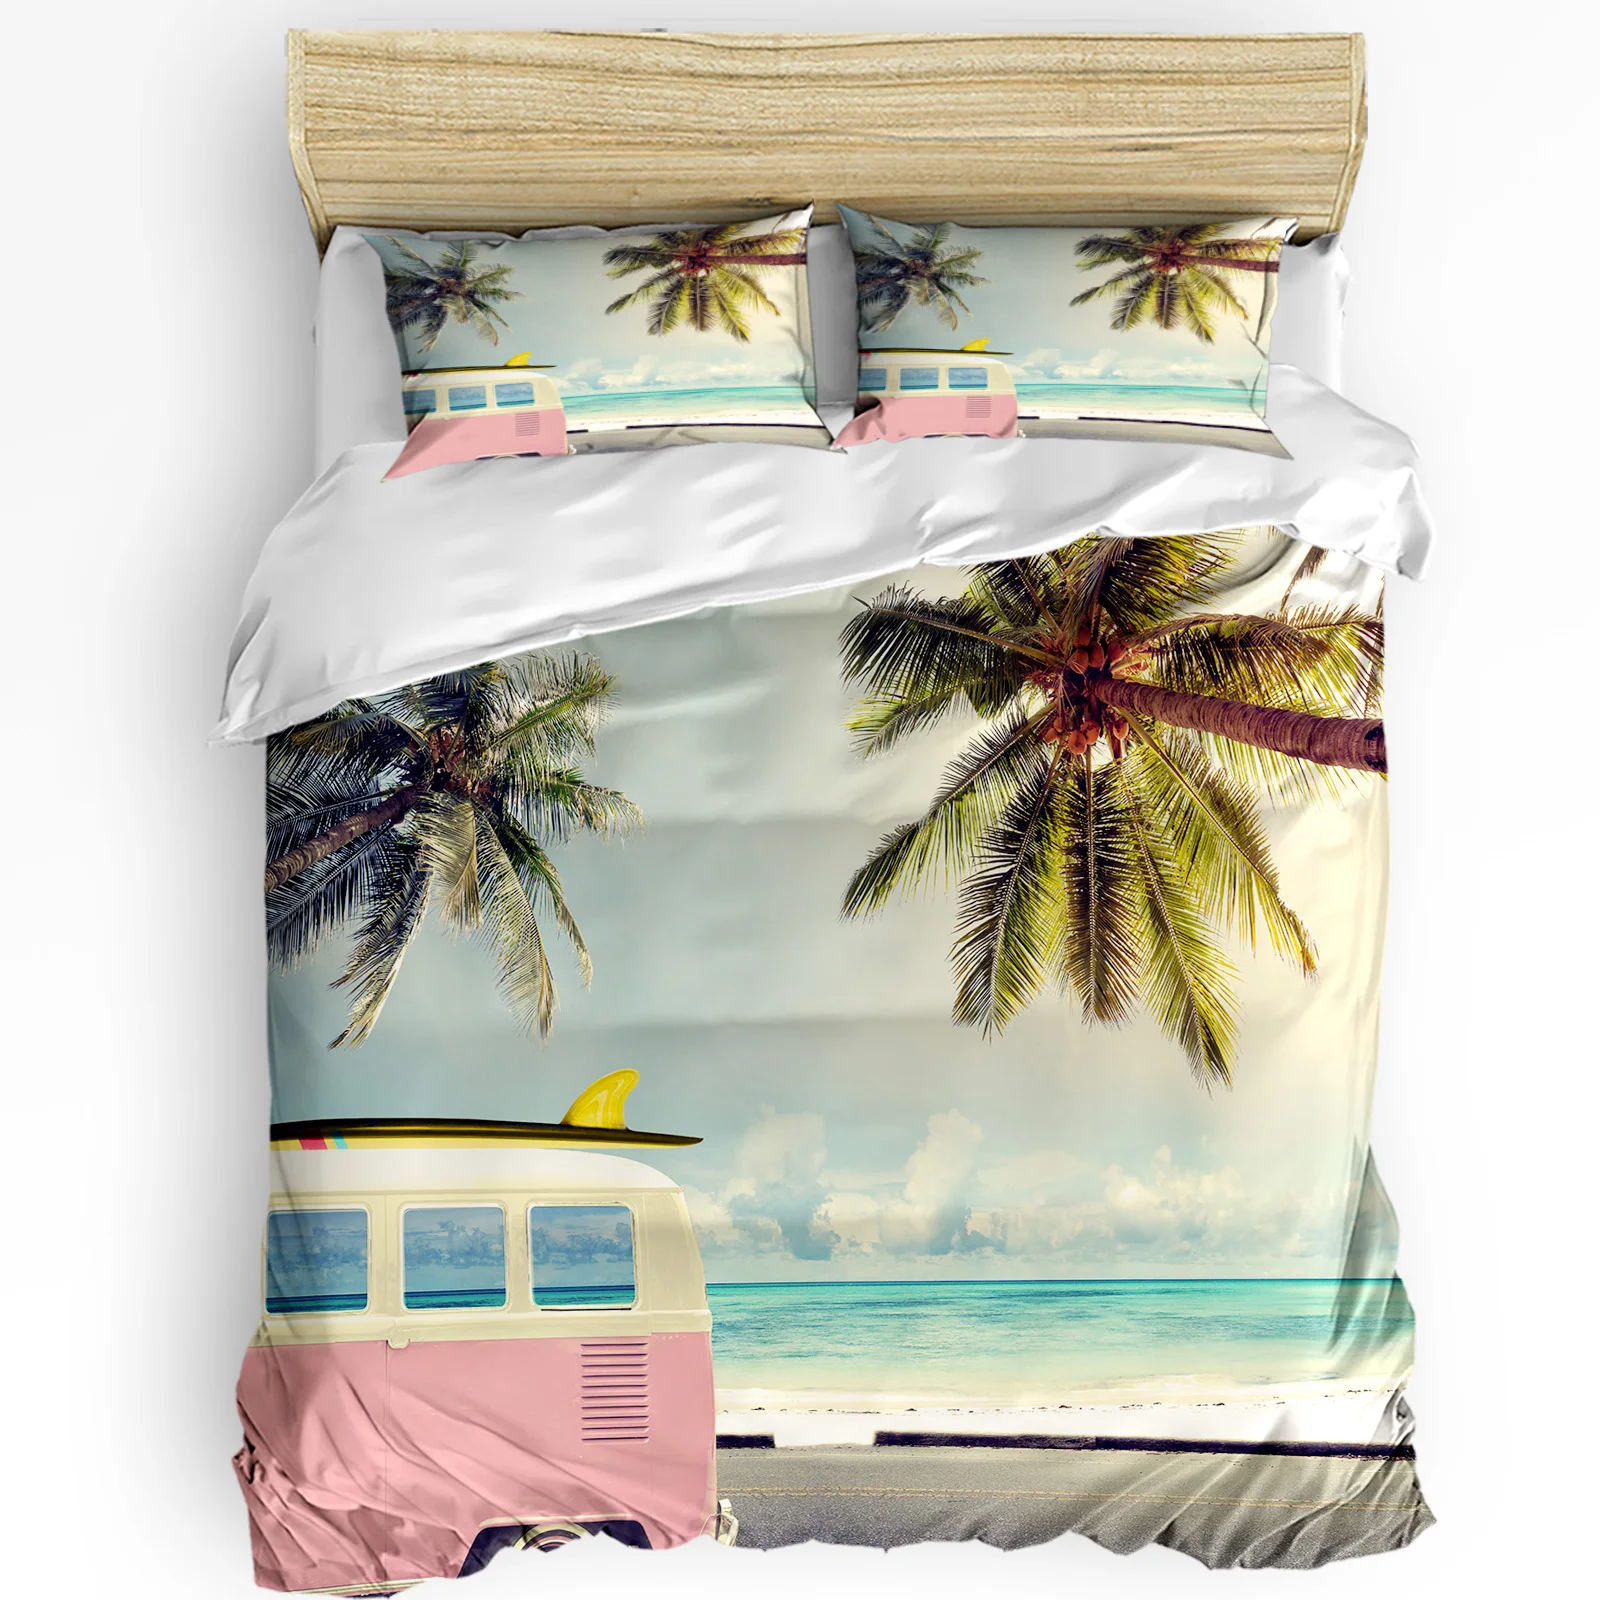 

Beach Bus Coconut Tree Bedding Set 3pcs Boys Girls Duvet Cover Pillowcase Kids Adult Quilt Cover Double Bed Set Home Textile